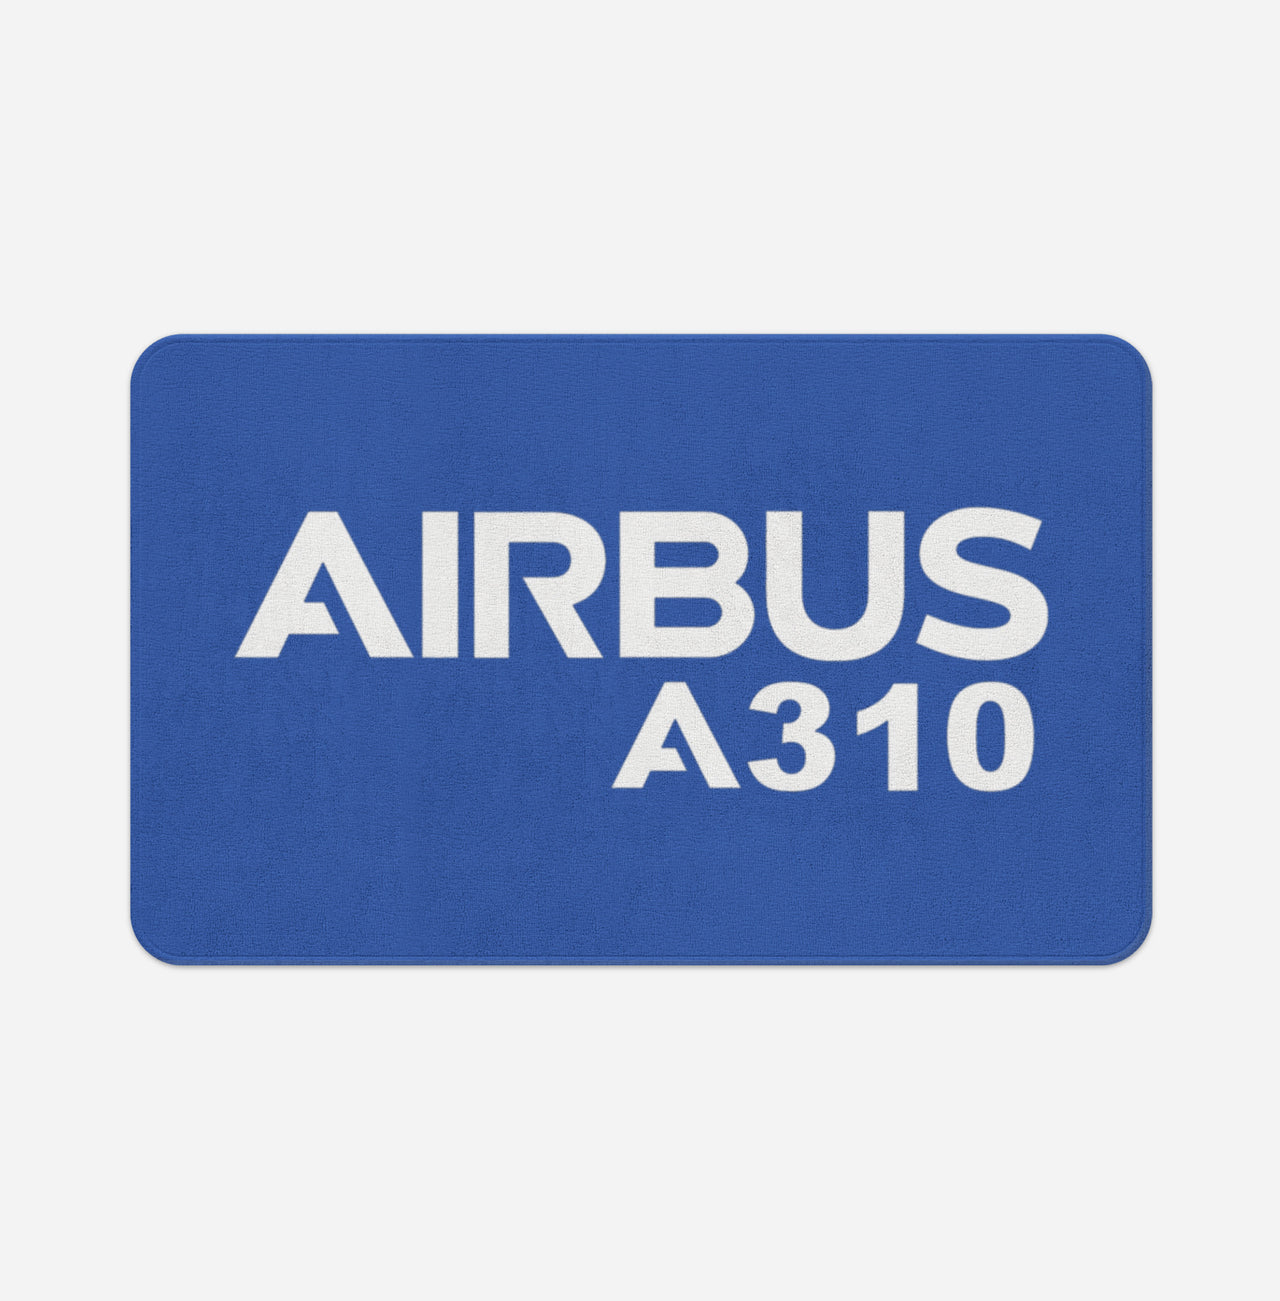 Airbus A310 & Text Designed Bath Mats